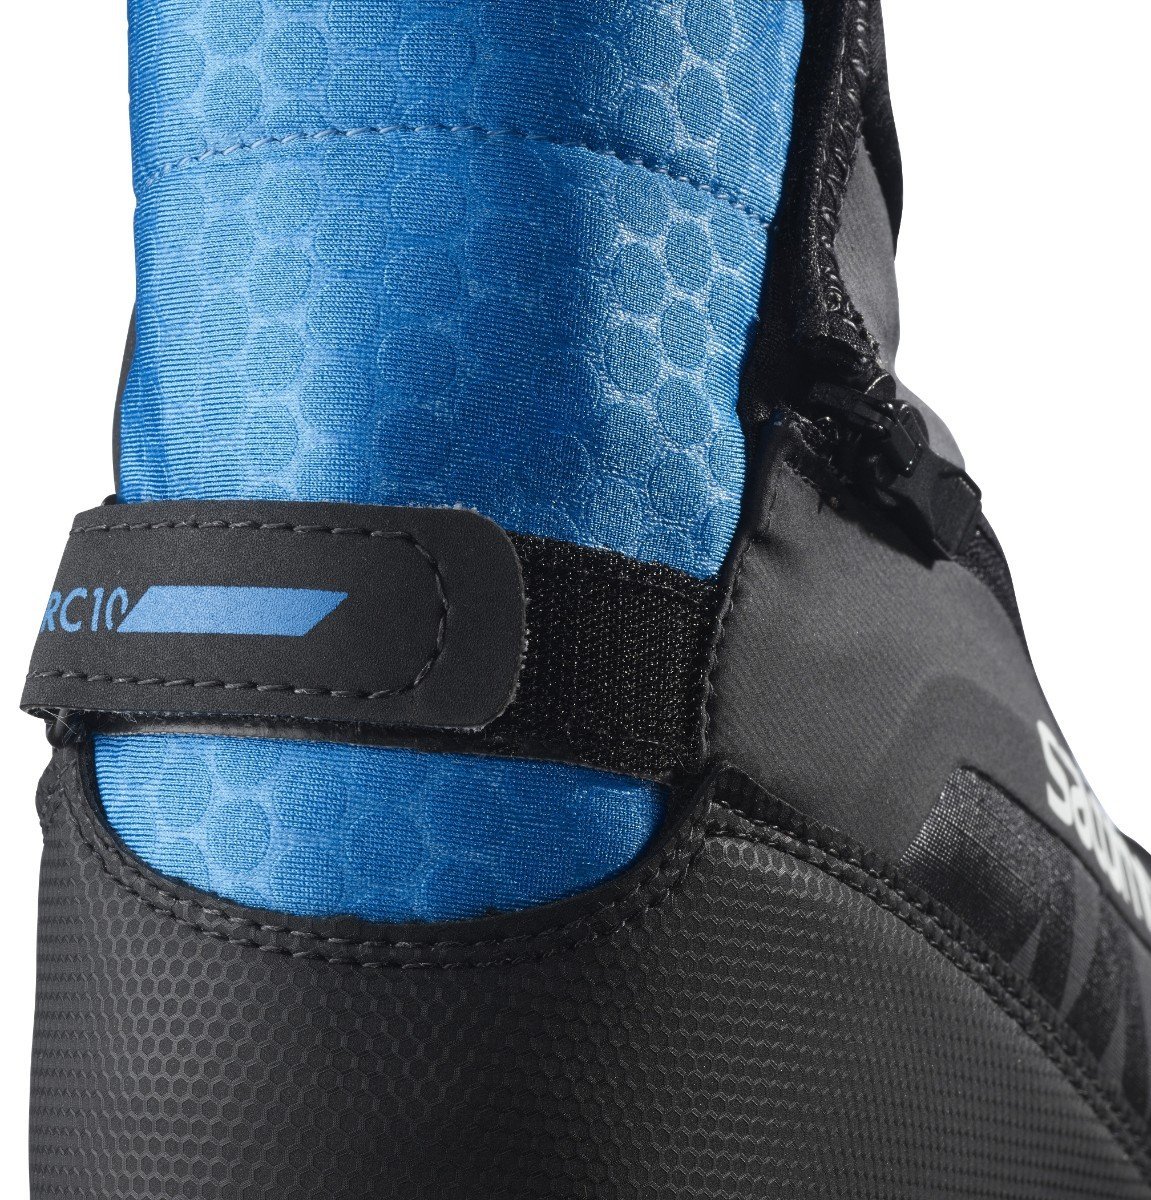 Obuv Salomon RC10 Prolink Uni Cross Country obuv - čierna/modrá